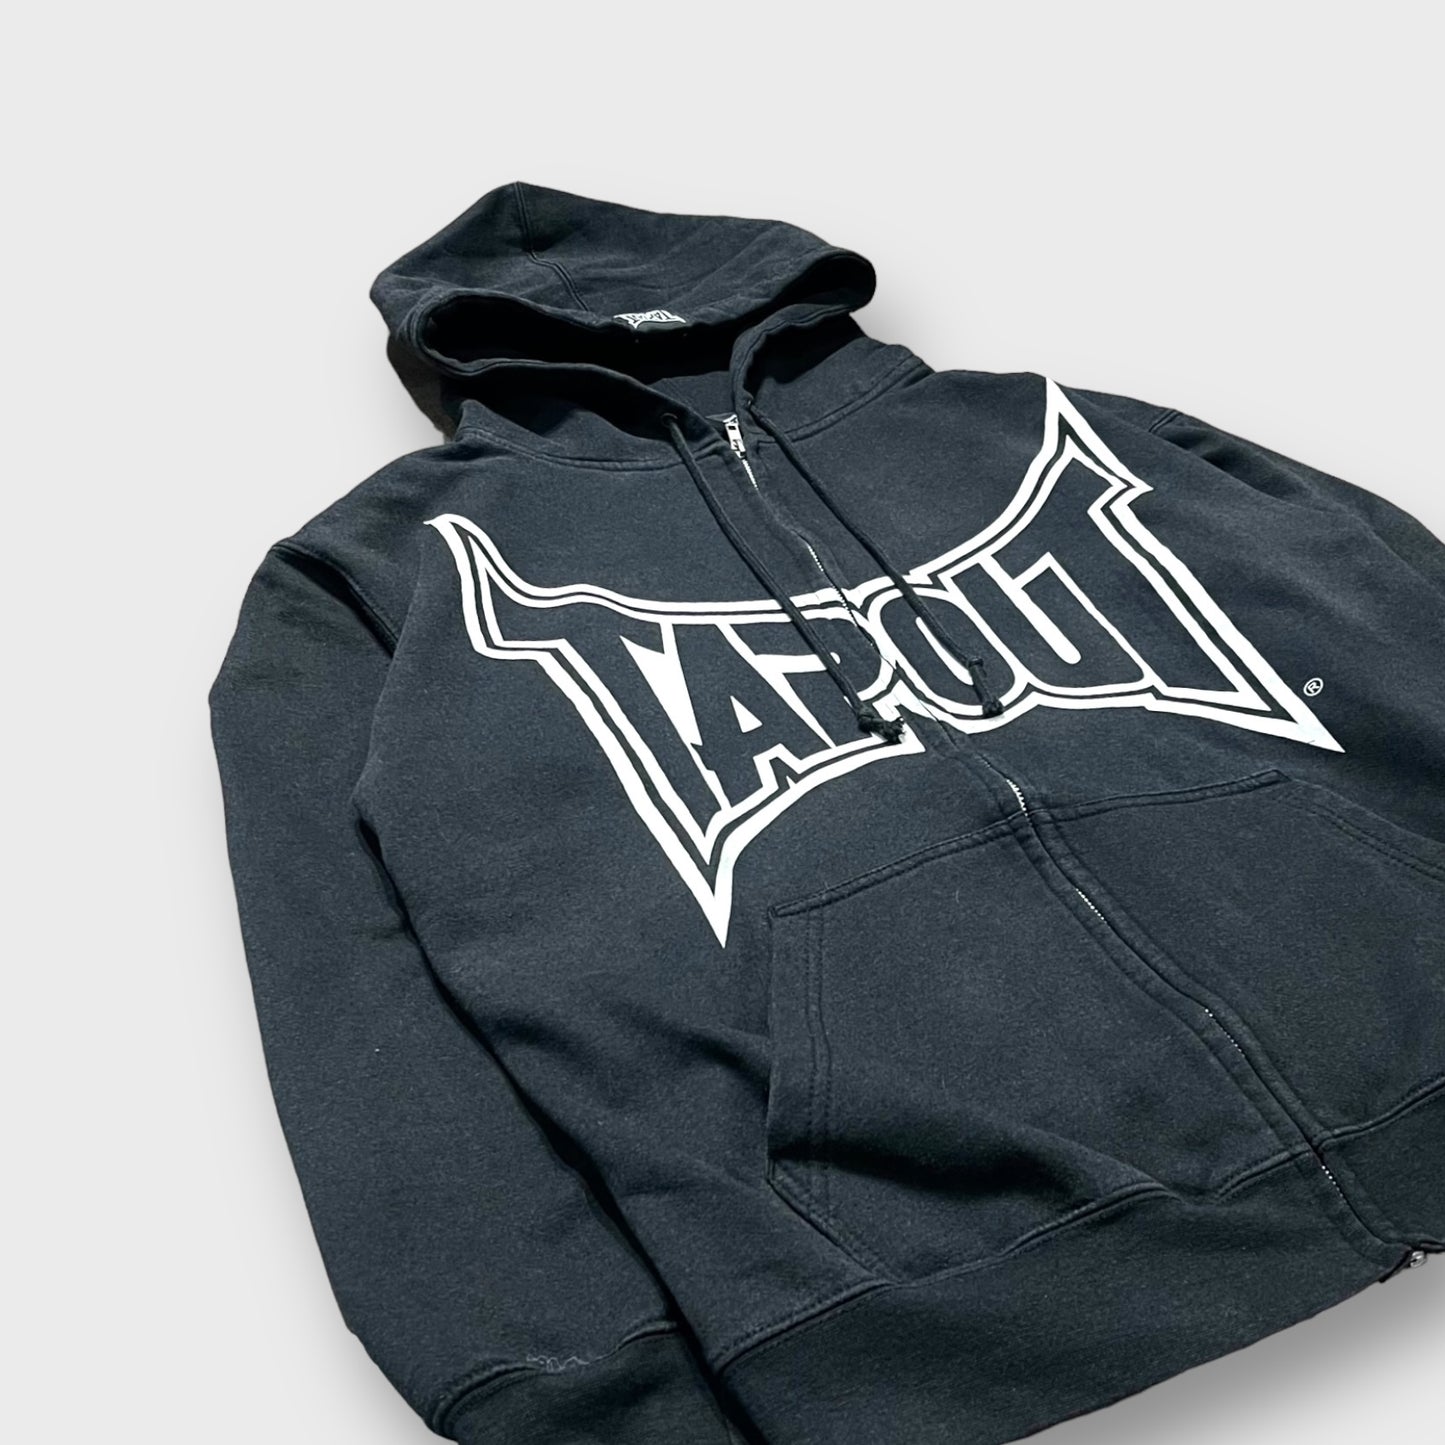 "TAPOUT" Logo design hoodie